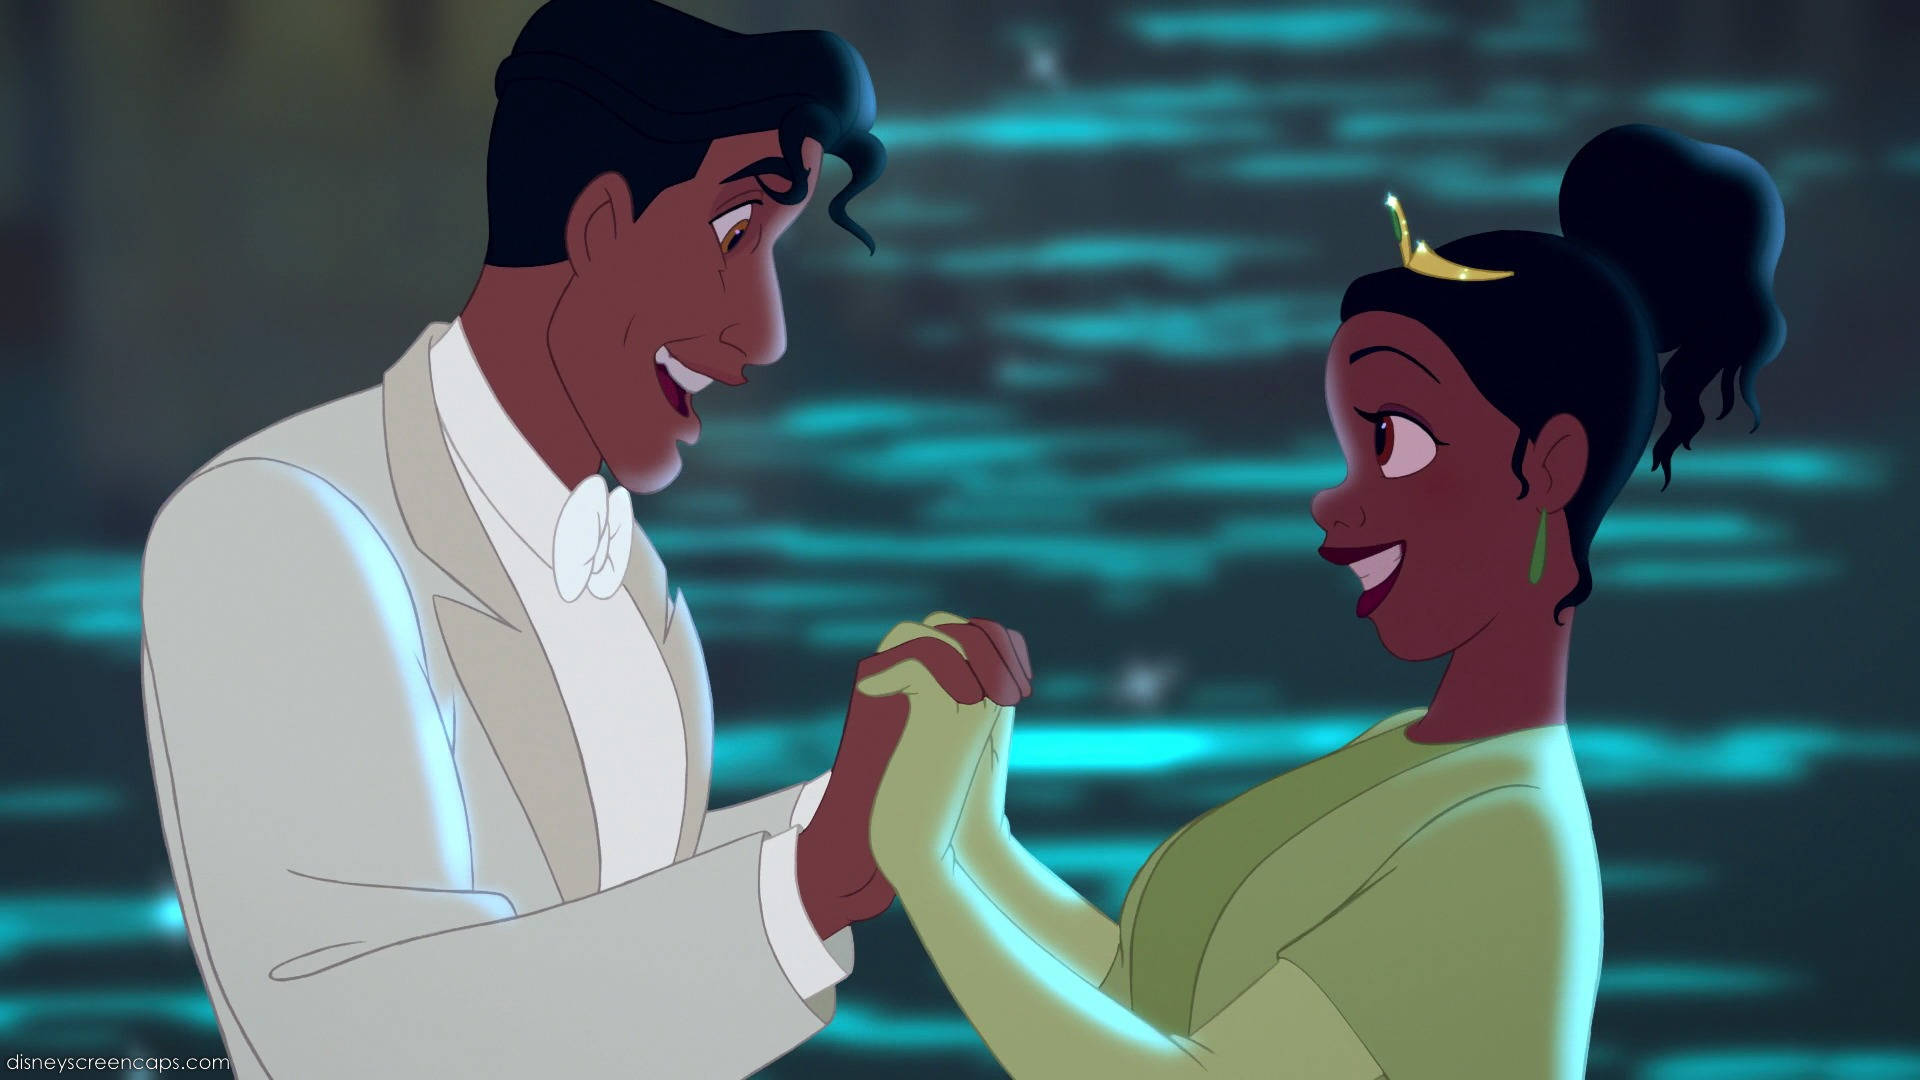 Disney Princess Tiana And Prince Naveen